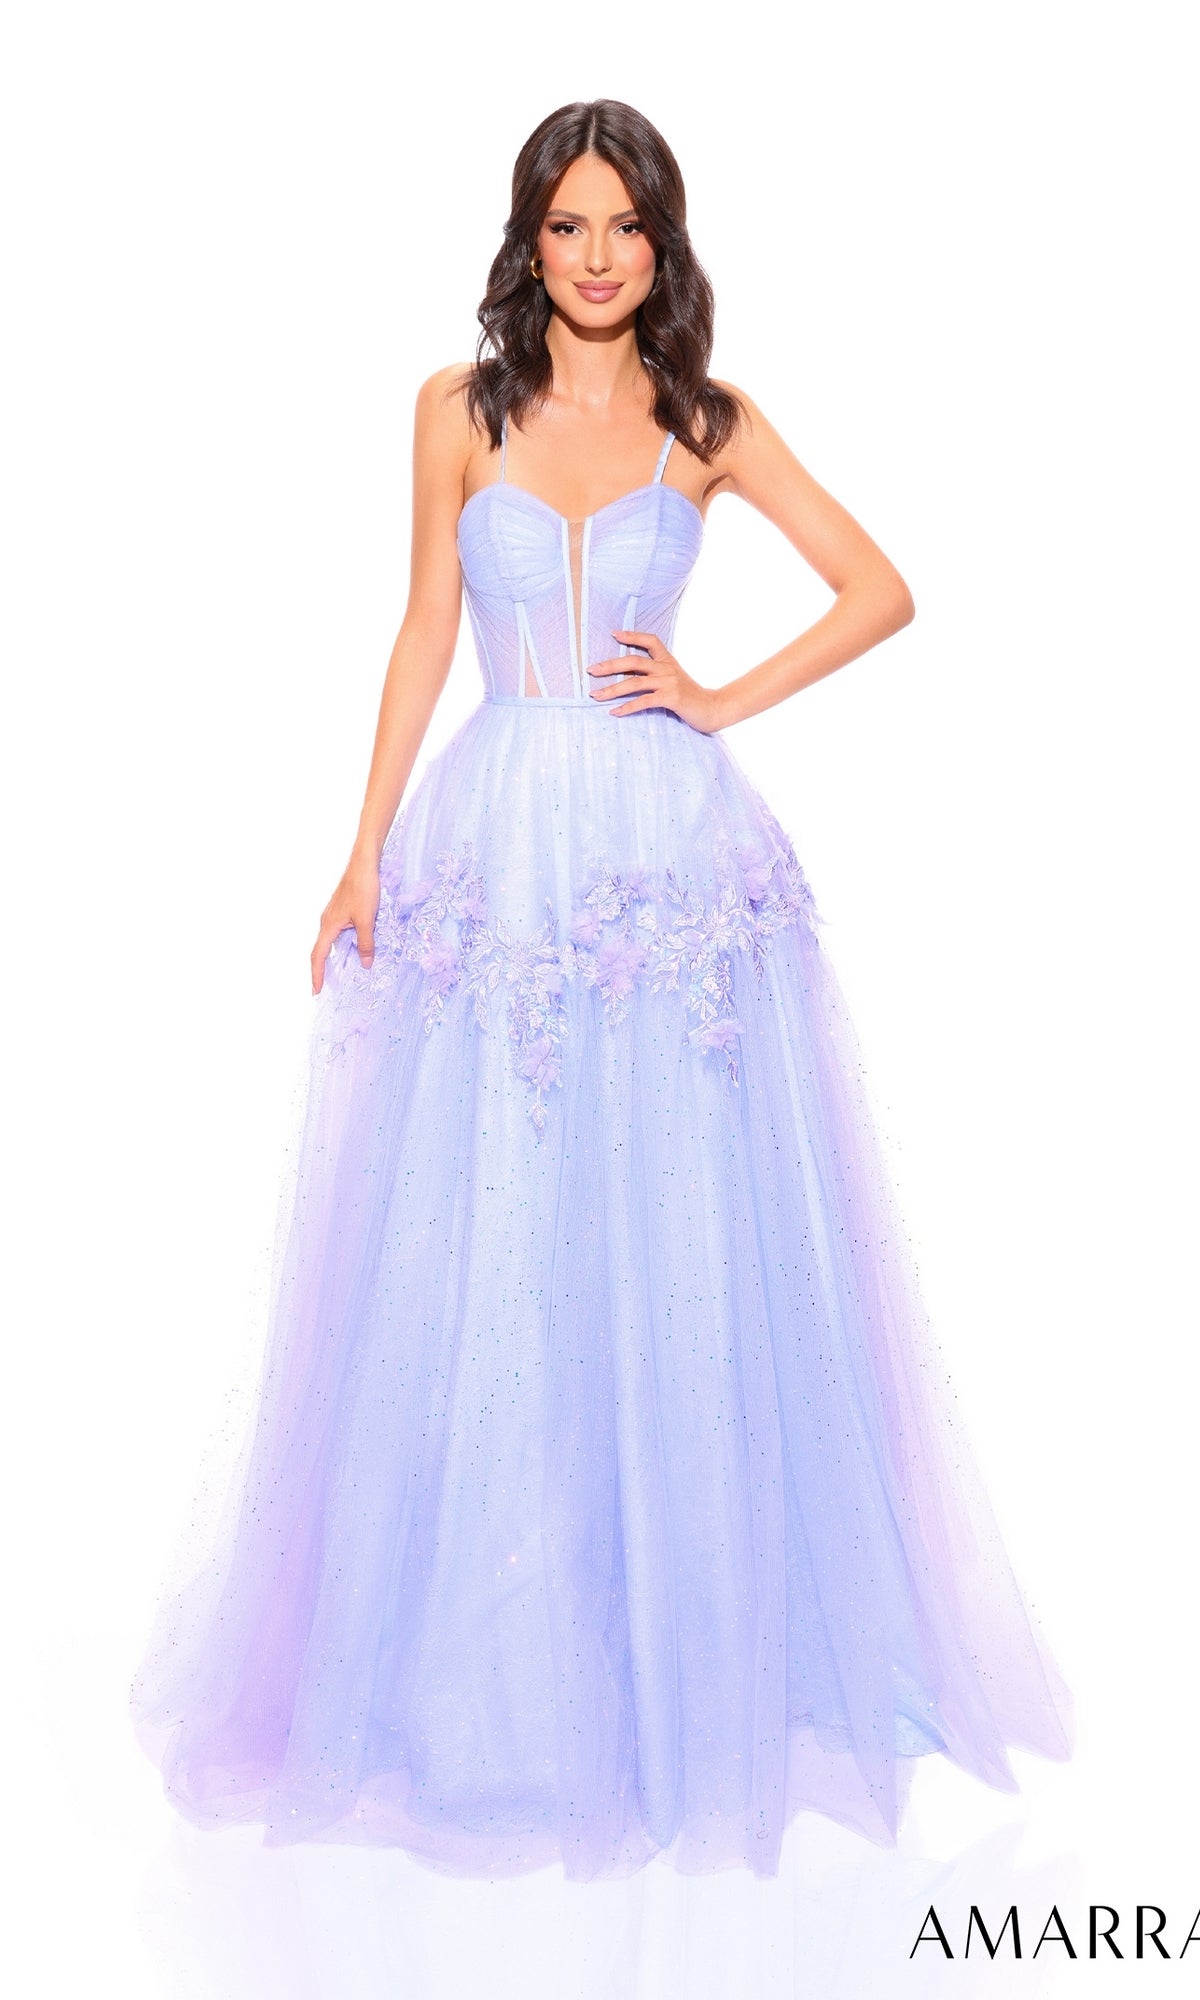 Amarra 88874 Long Prom Dress - PromGirl